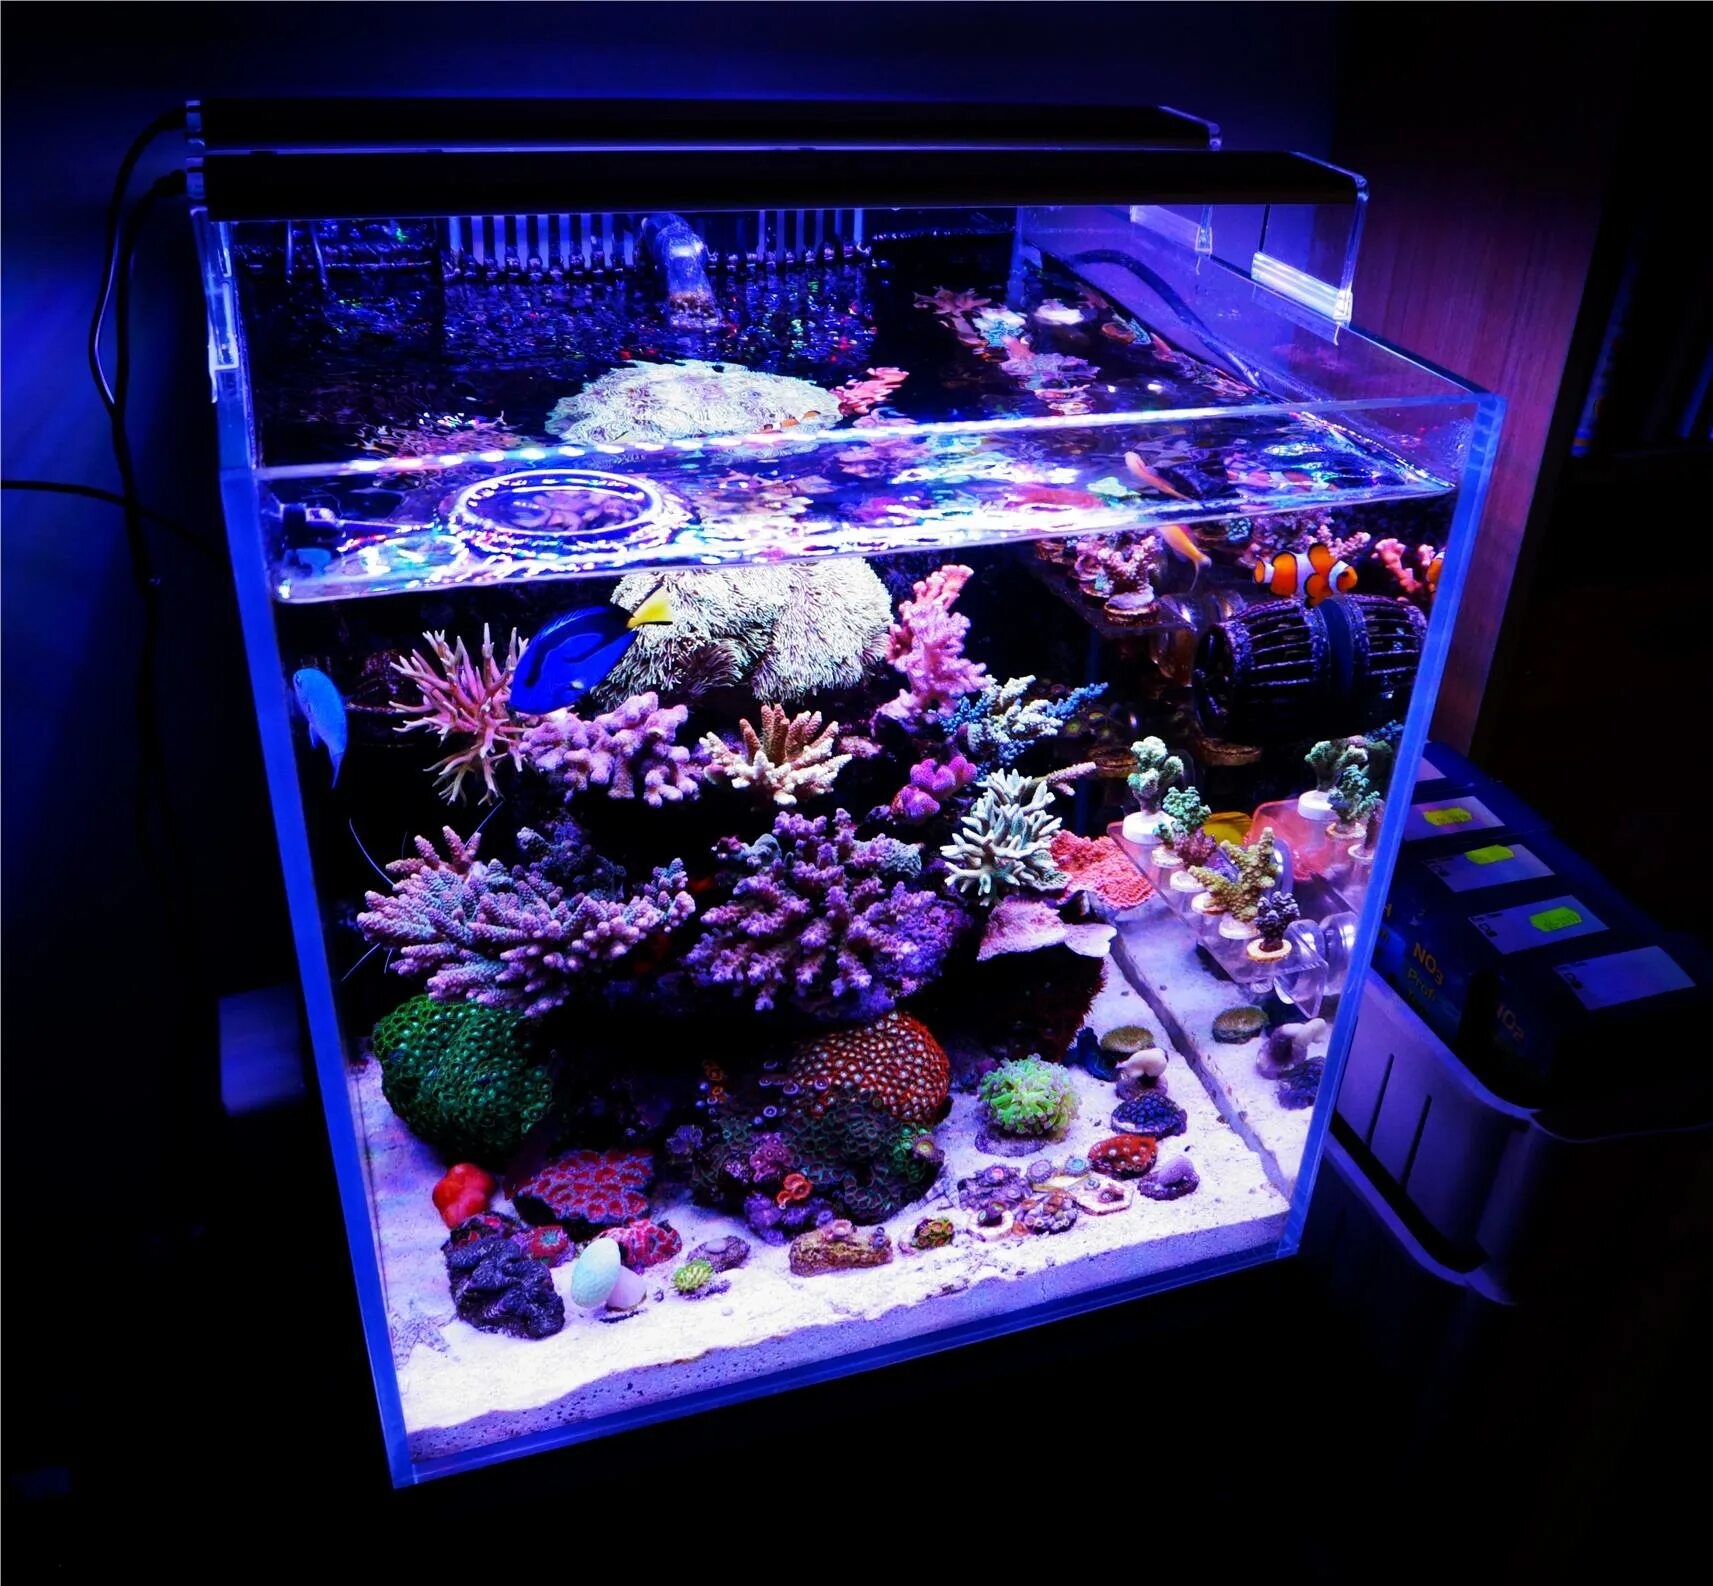 Аквариум Nano Reef. Морской аквариум Nano Reef. Светильник Chihiros для морского аквариума. Свет для морского аквариума 80 литров. Коллекционер заказал аквариум